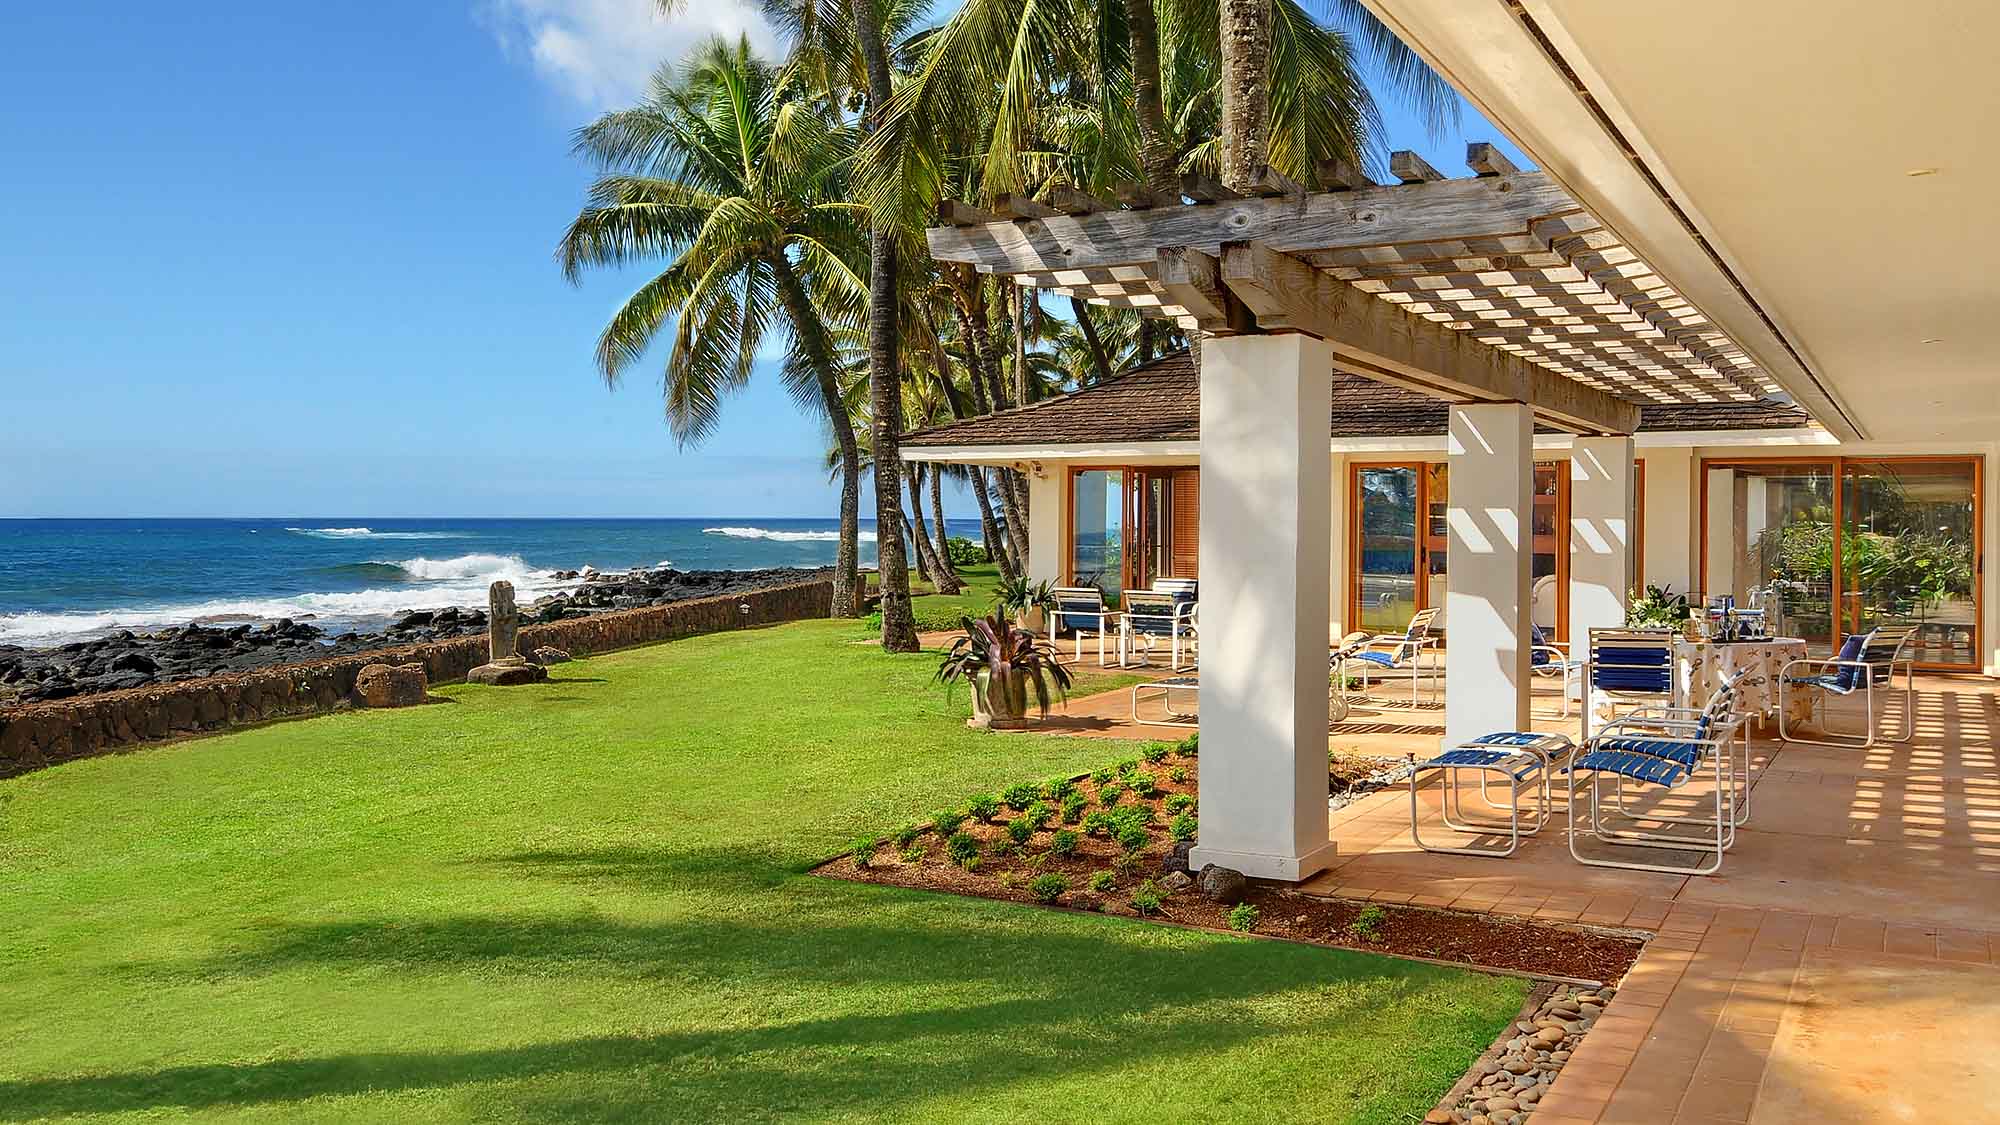 The Donohugh Home - Parrish Kauai